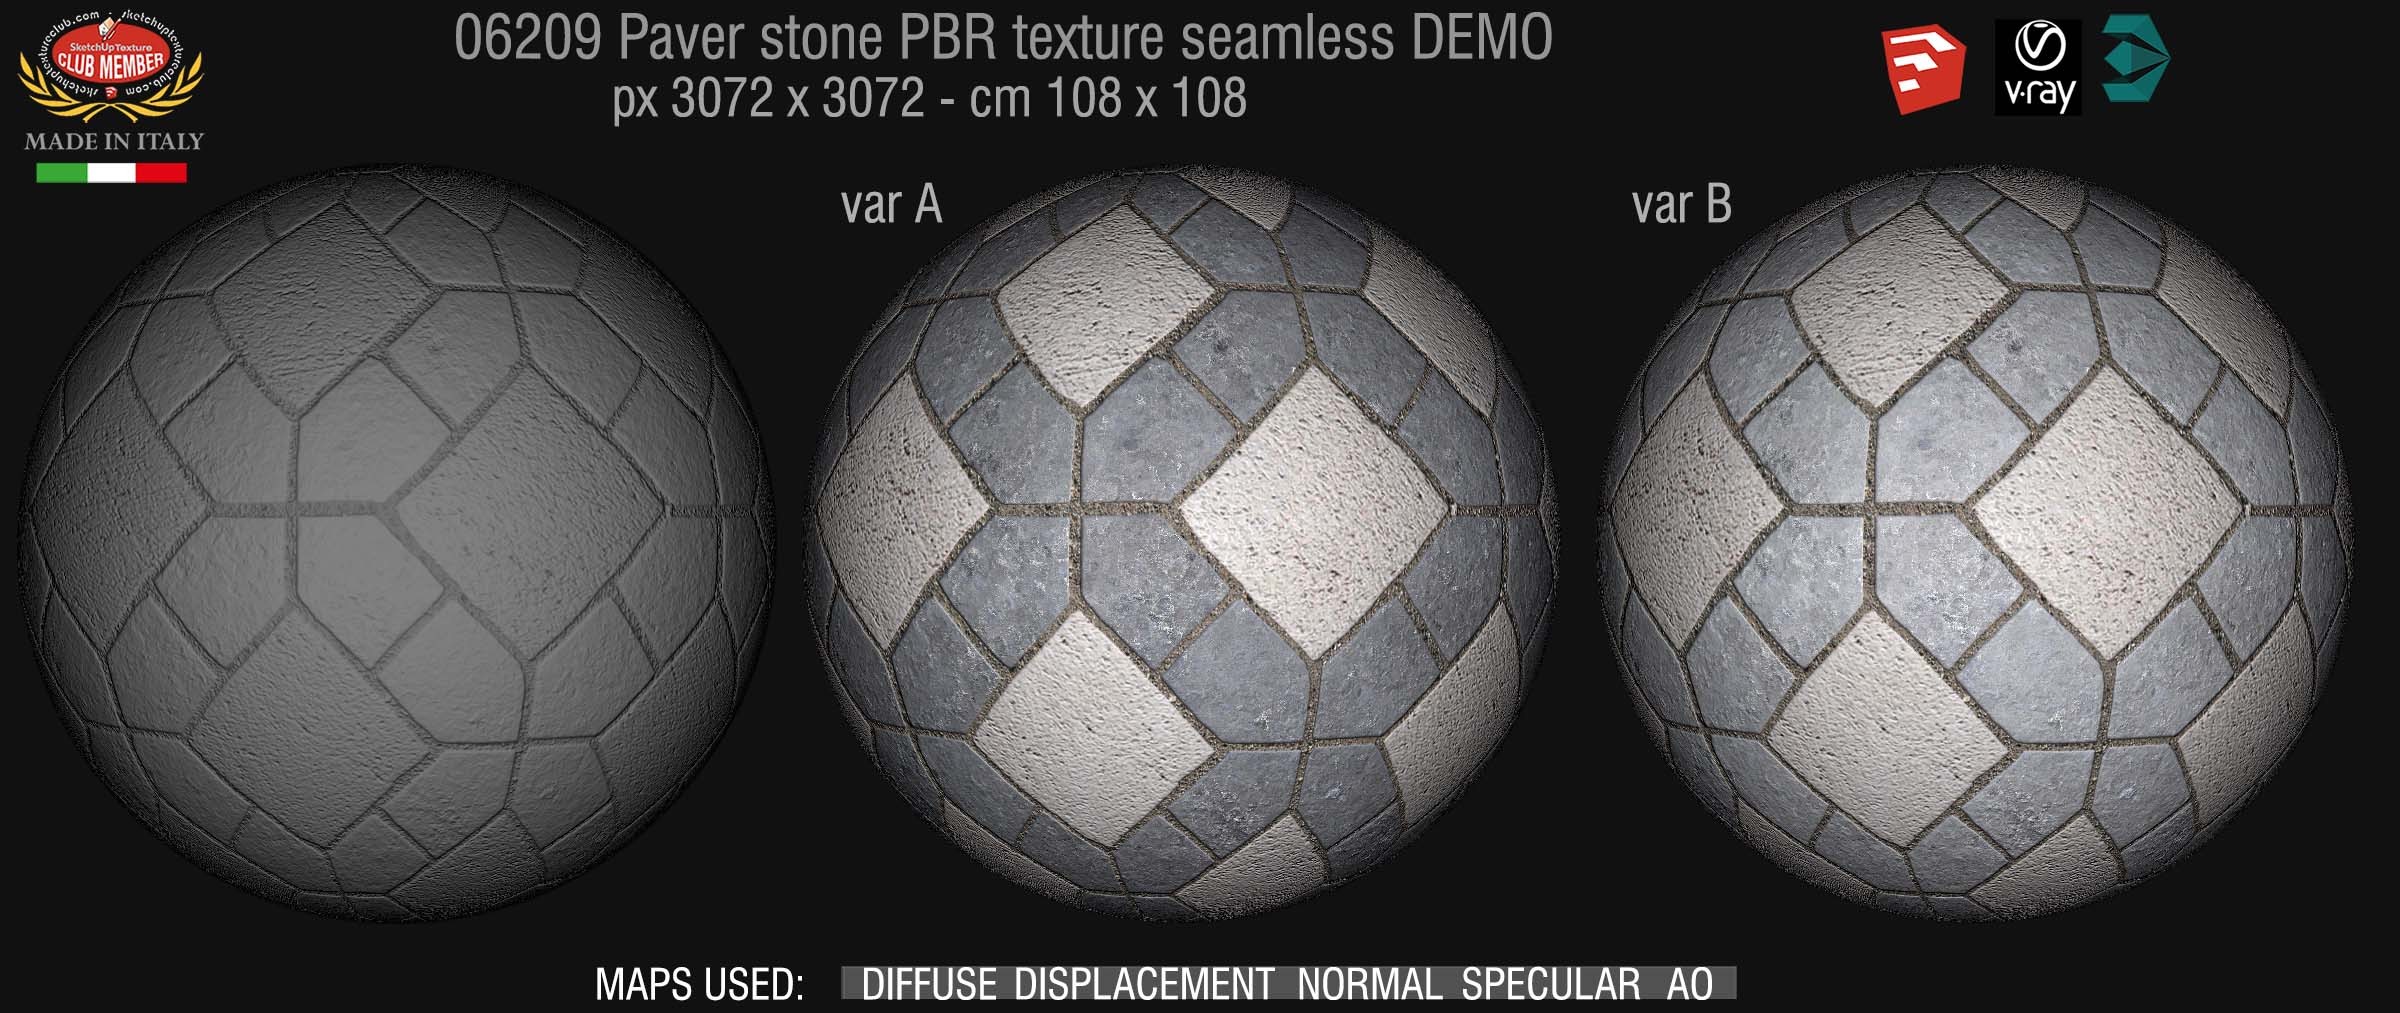 06209 _paver stone PBR texture seamless DEMO